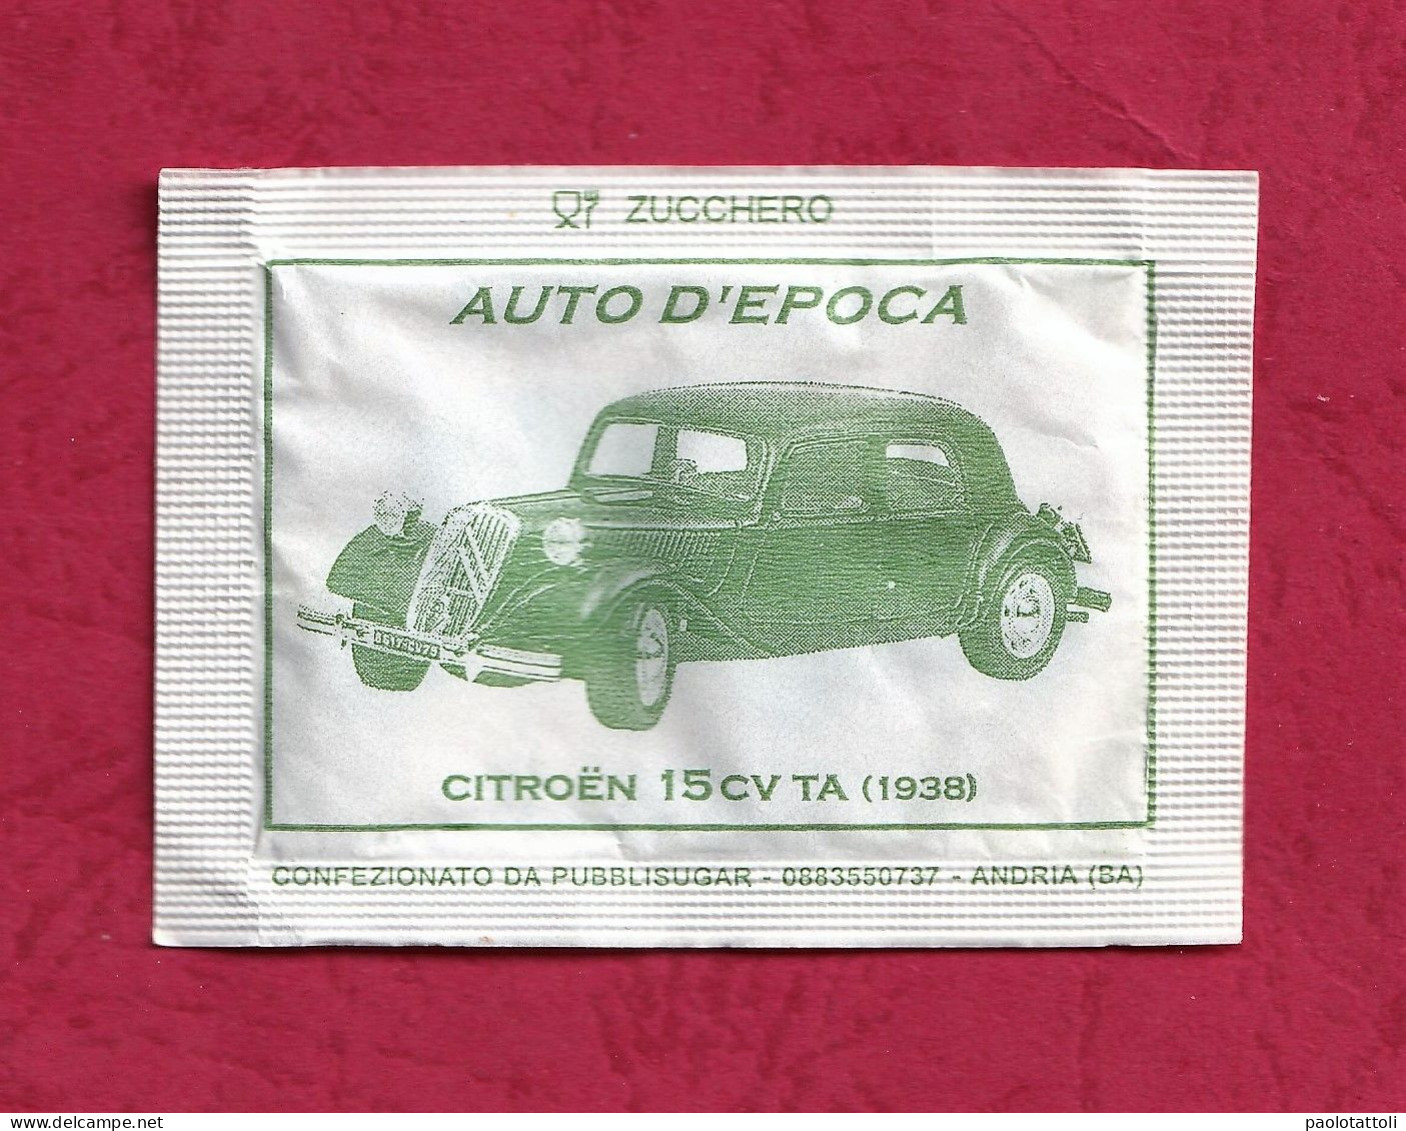 Bustina Vuota Zucchero. Empty Sugar Bag- Cars. Auto D'epoca, Citroen 15 Cv TA-1938. Packed By Pubblisugar, Andria. BA. - Sucres